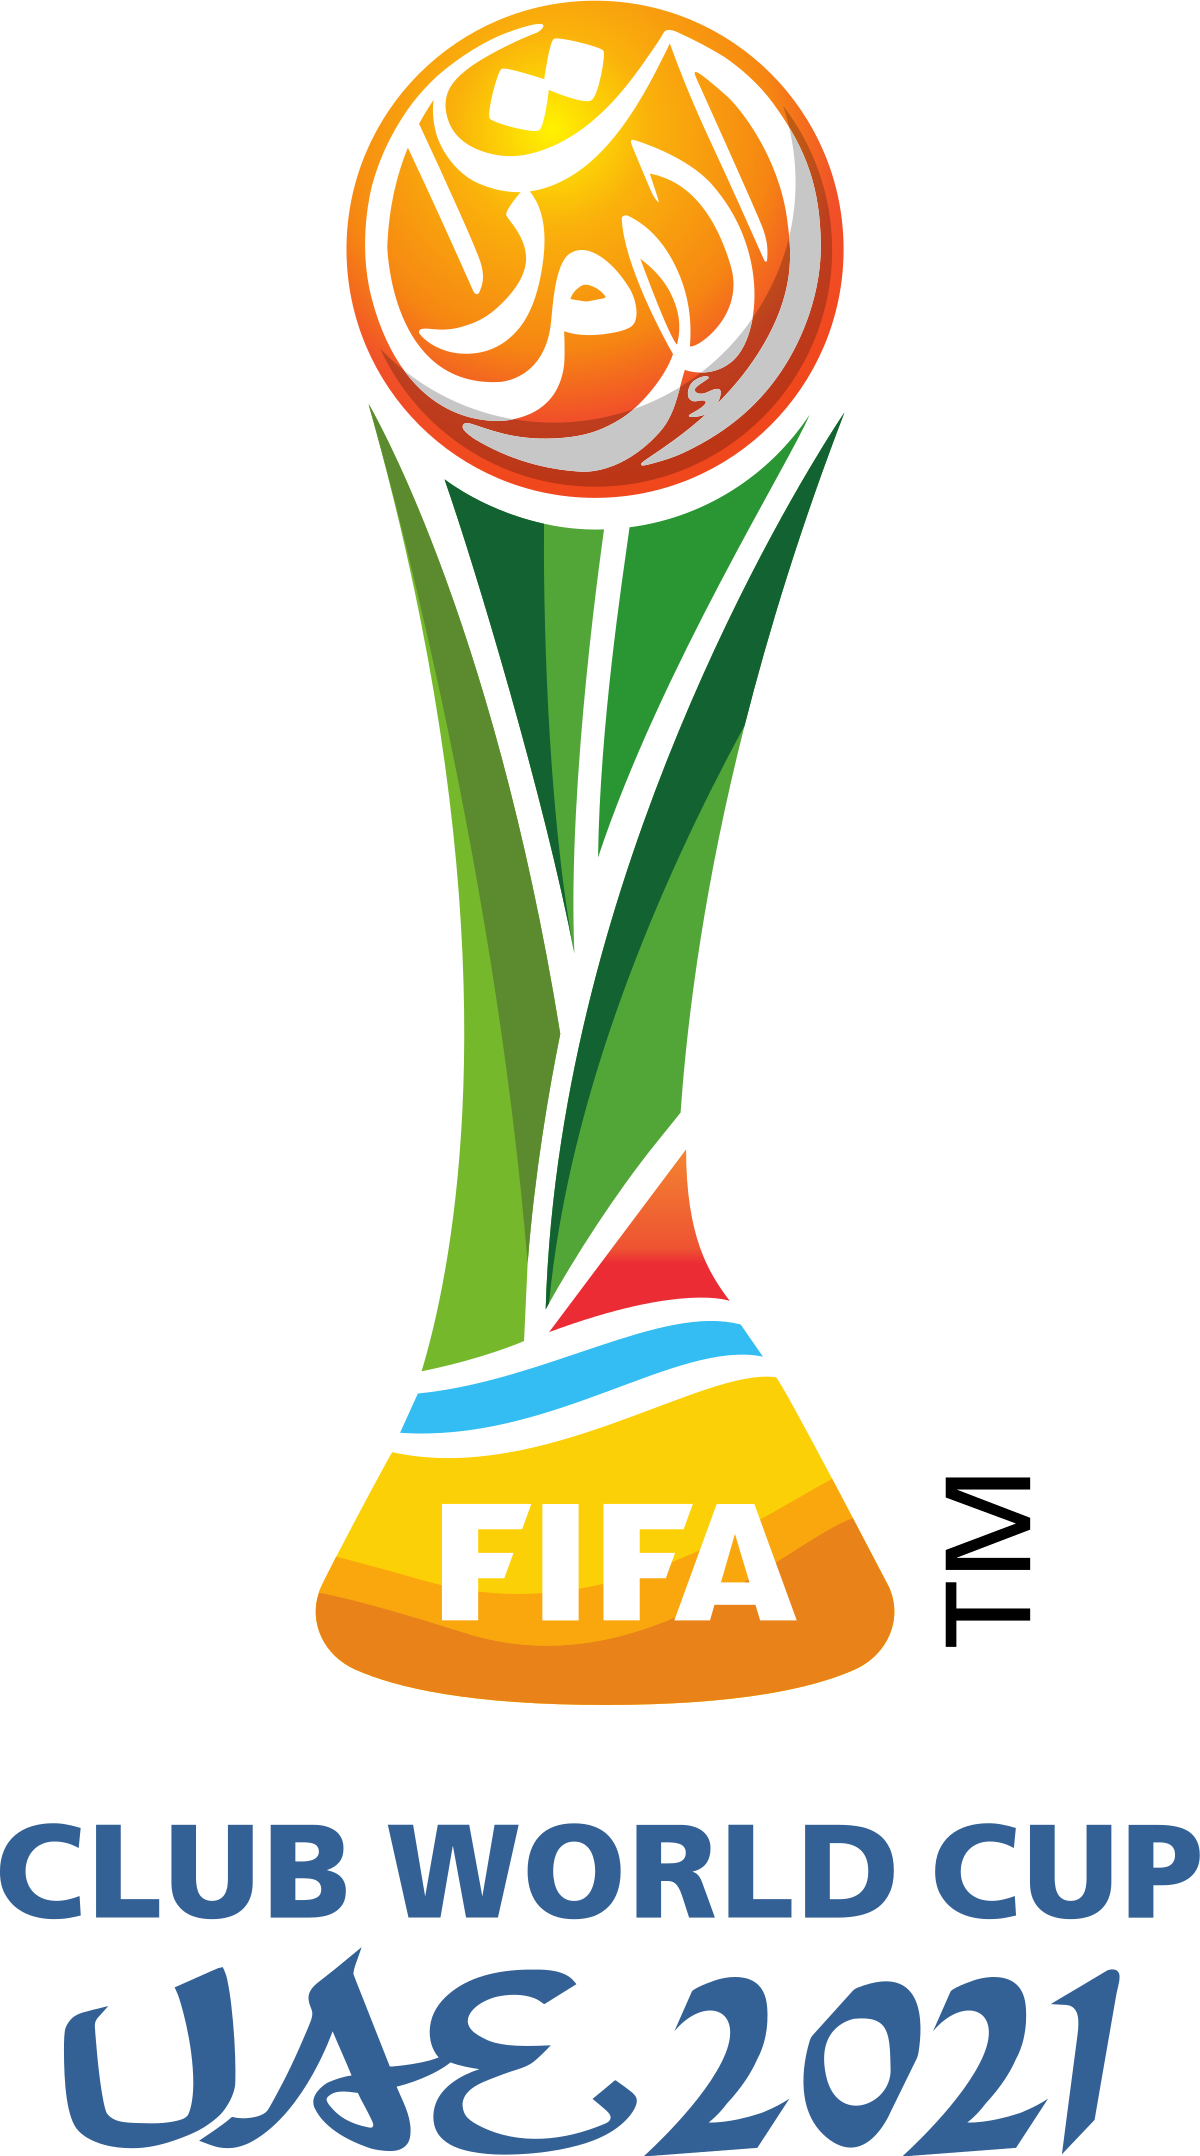 2021 FIFA Club World Cup - Wikipedia